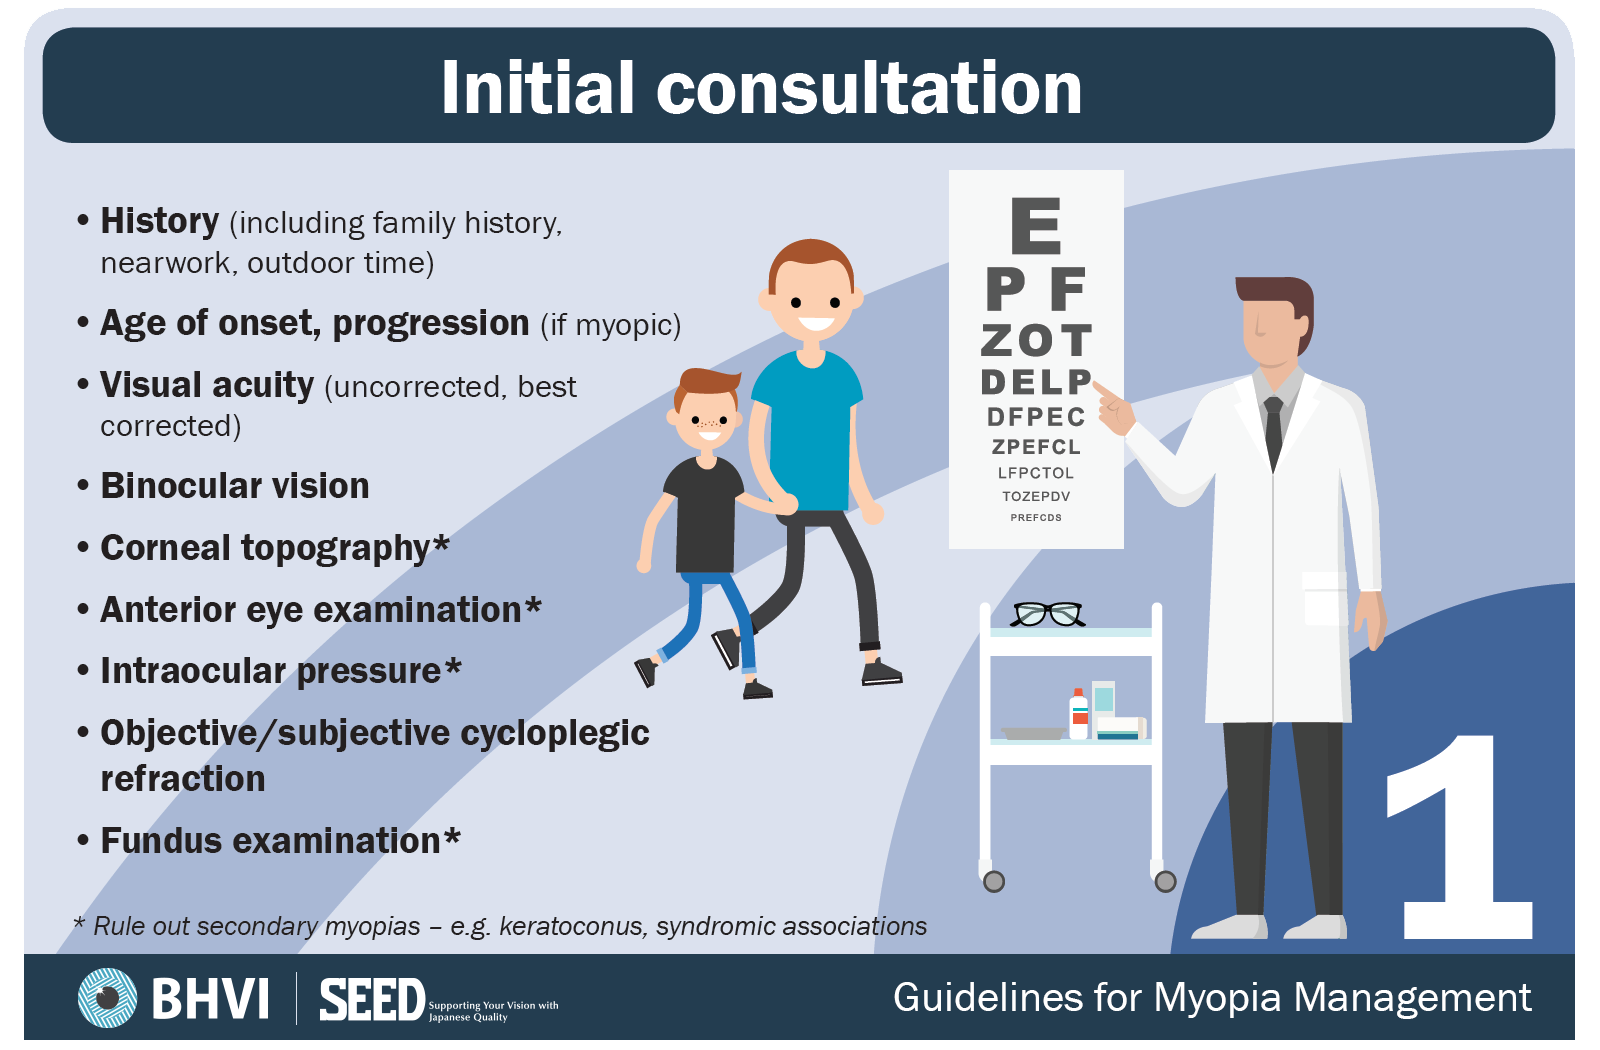 1. Initial consultation - BHVI Myopia Guidelines.png